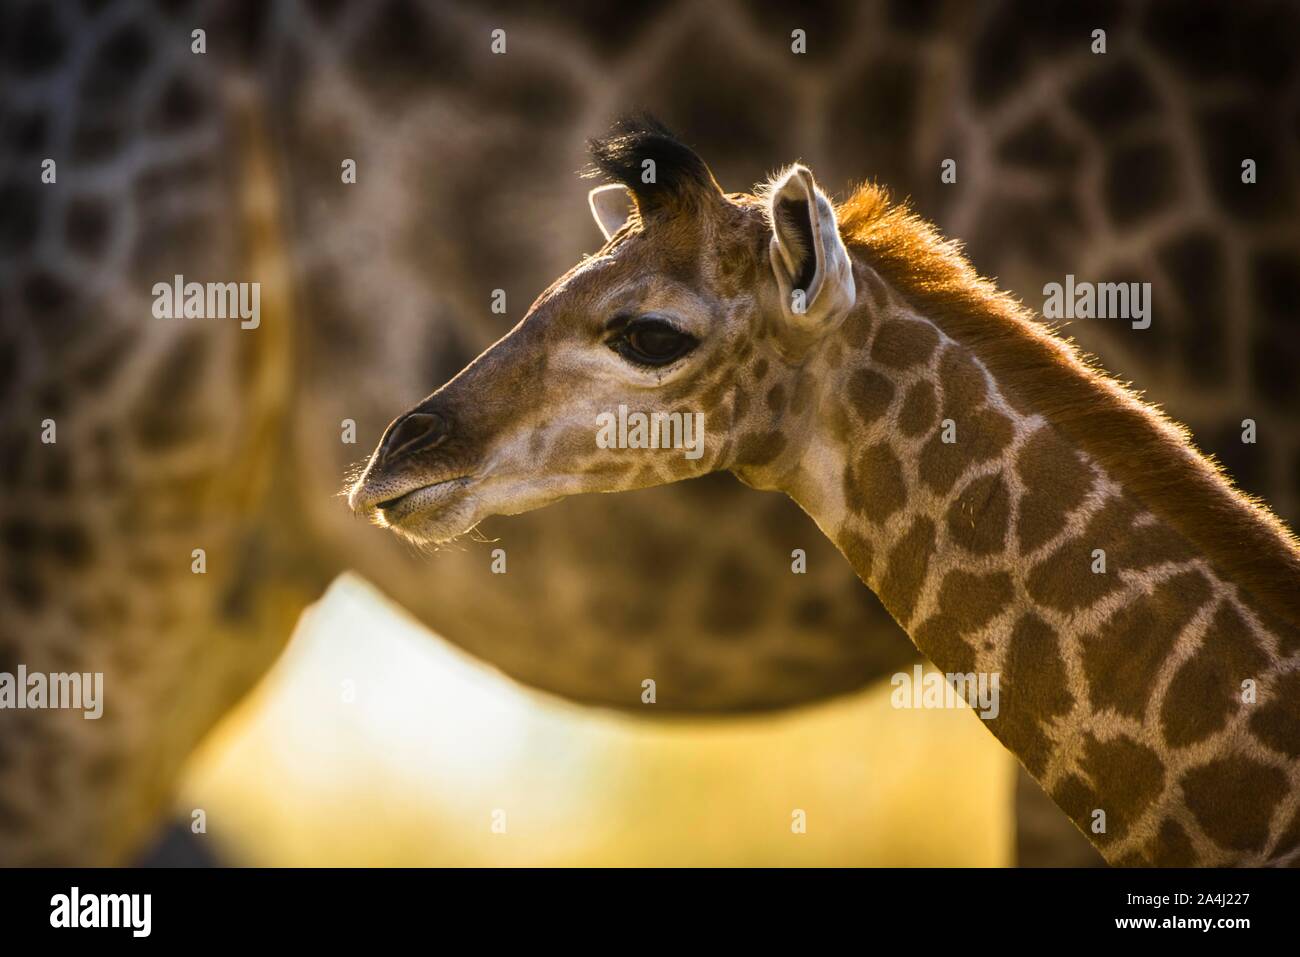 Angolan Giraffe (Giraffa camelopardalis angolensis), young animal, animal portrait, Moremi Wildlife Reserve, Ngamiland, Botswana Stock Photo